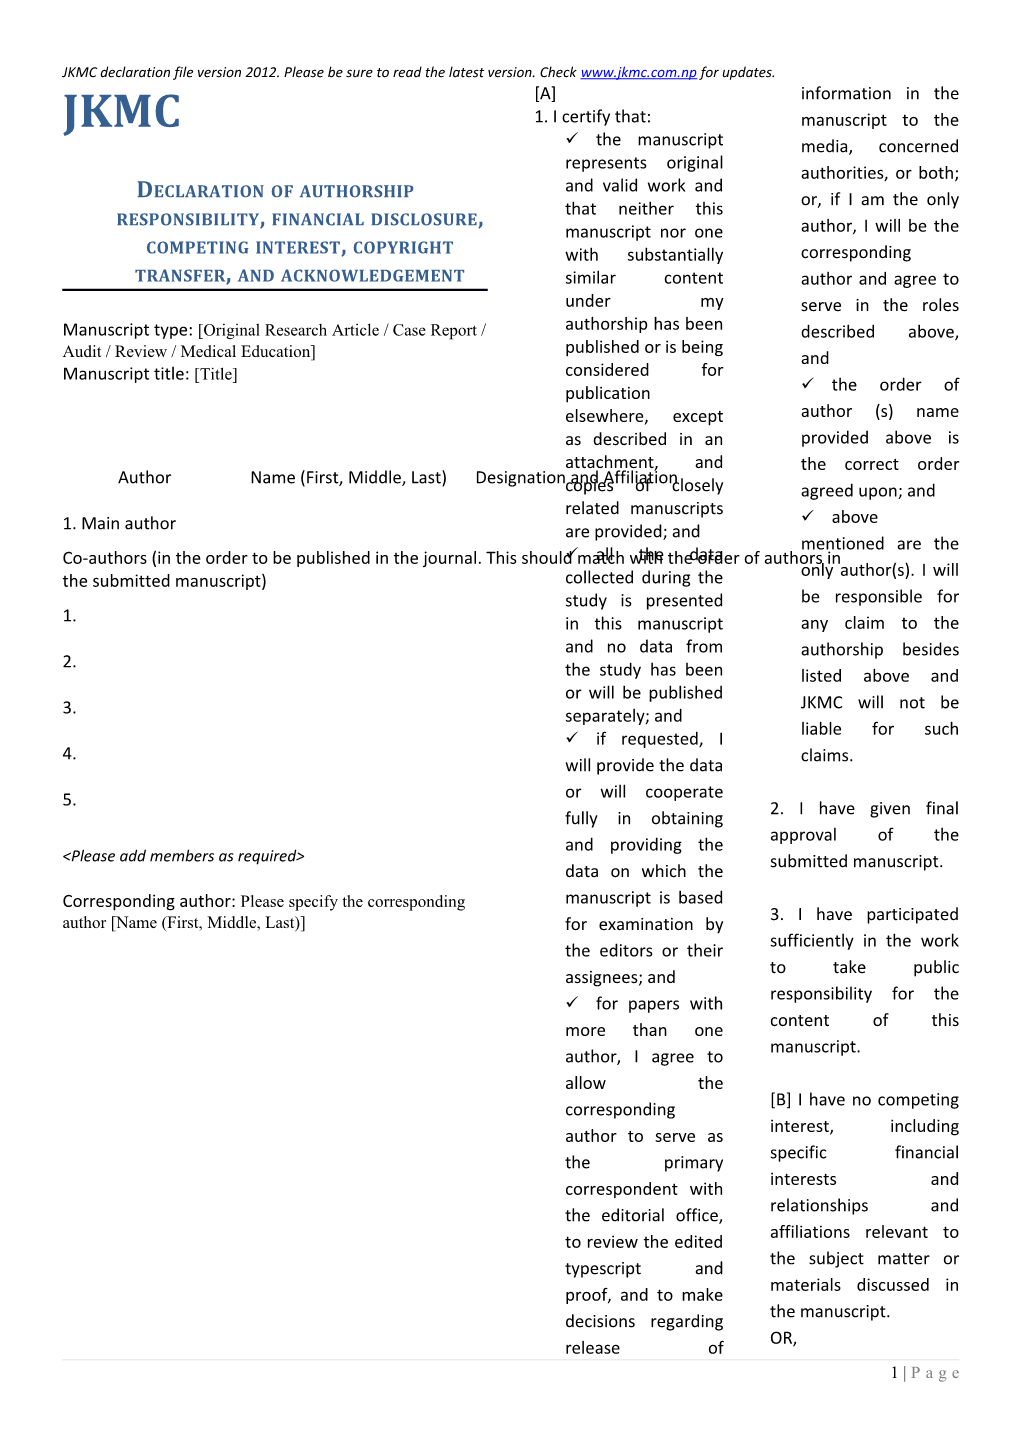 Manuscript Type: Original Research Article / Case Report / Audit / Review / Medical Education